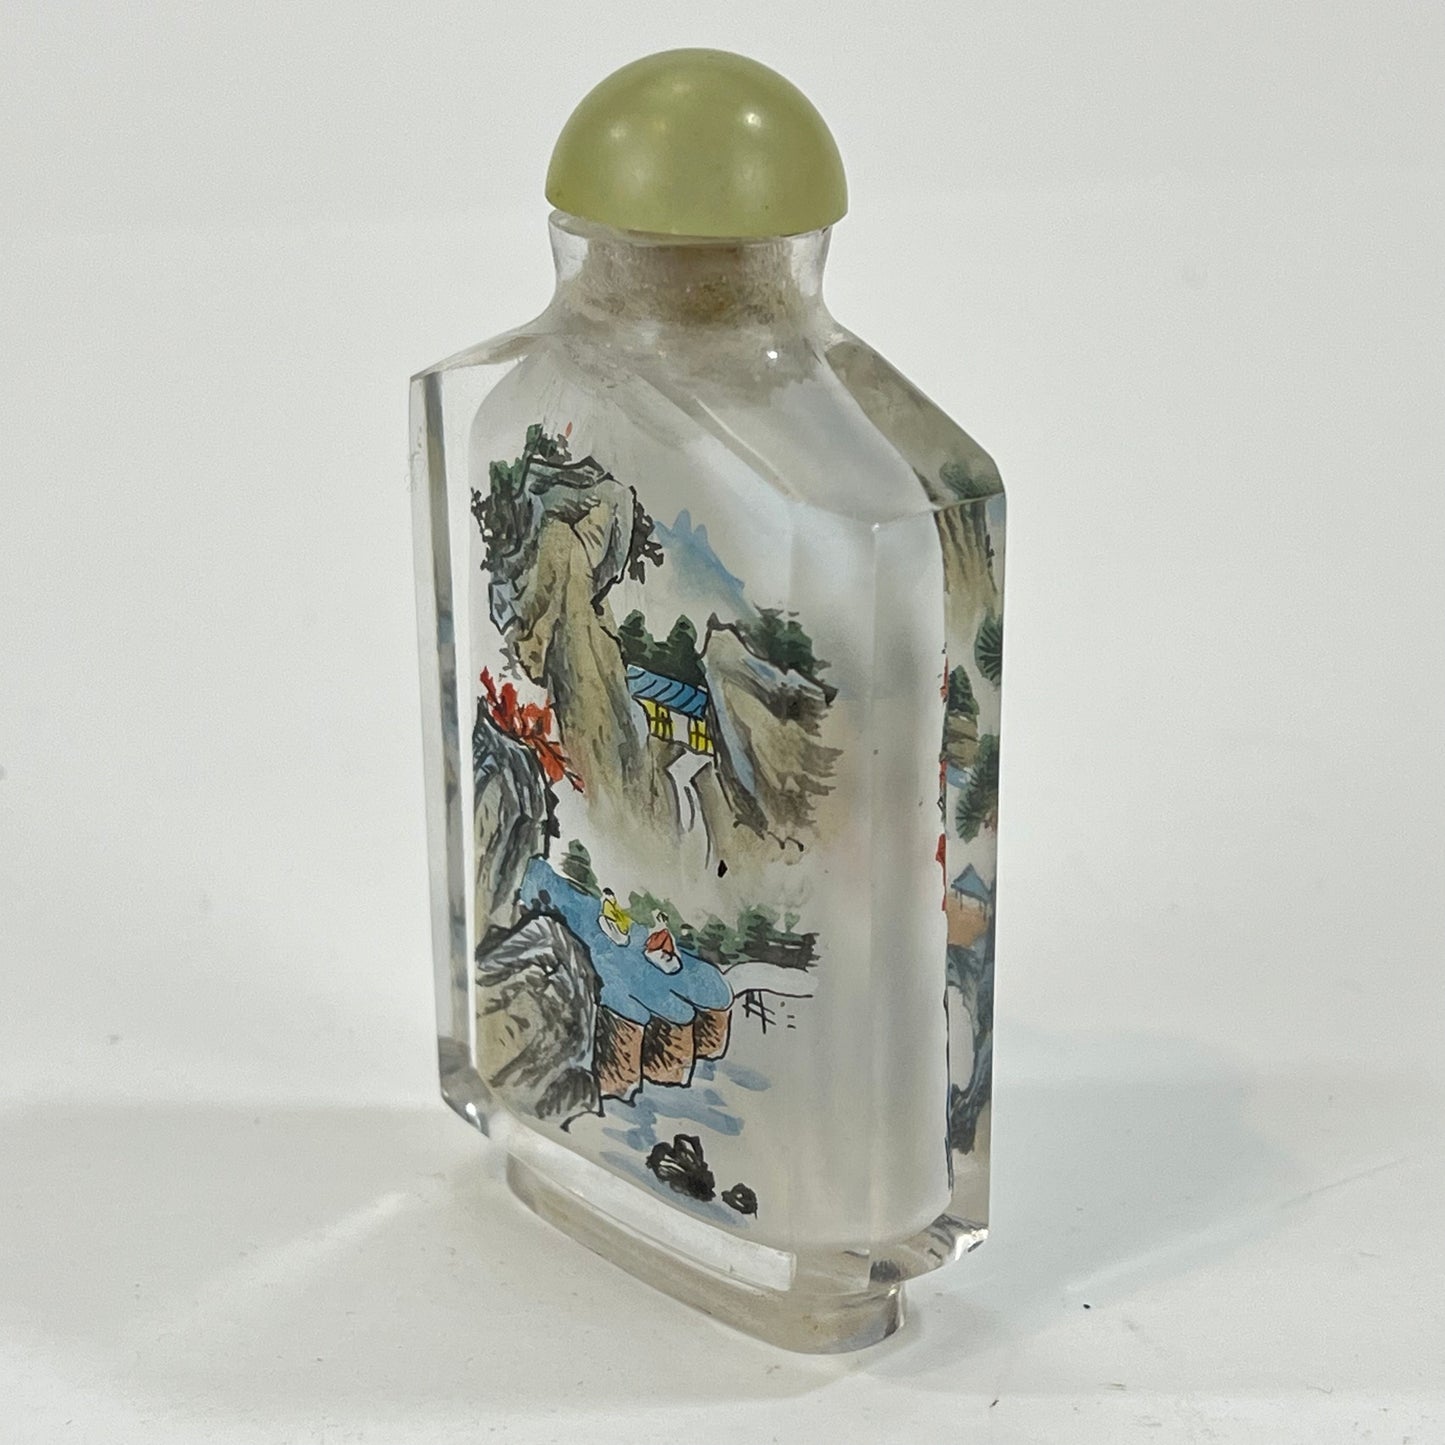 Vintage Chinese Snuff Bottle Reverse-Painted Landscape 4"